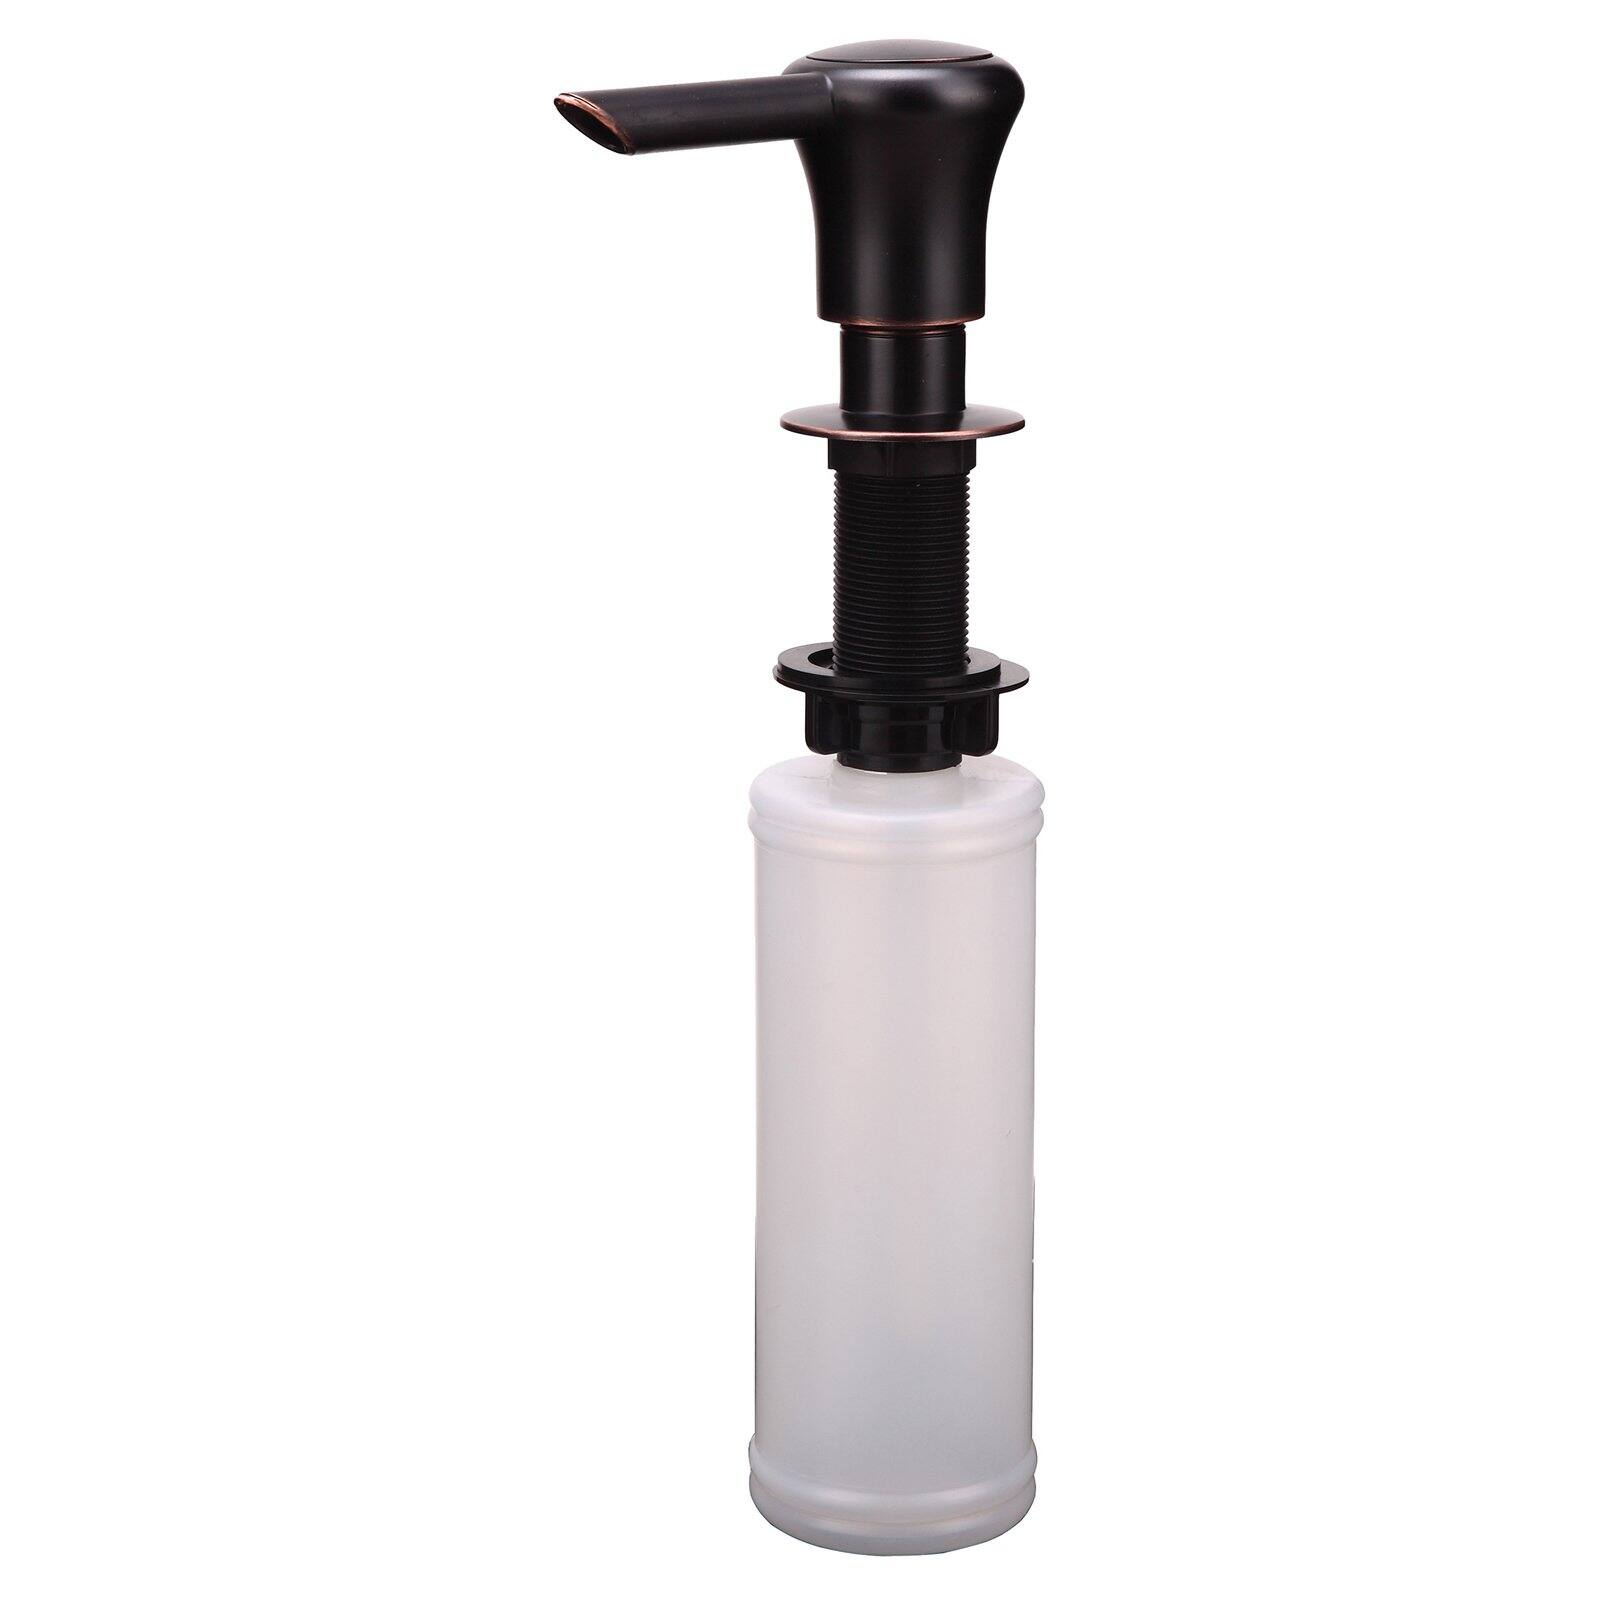 Ultra Faucets Oil Rubbed Bronze Oil Rubbed Bronze Zinc Lotion/Soap Dispenser - image 1 of 2